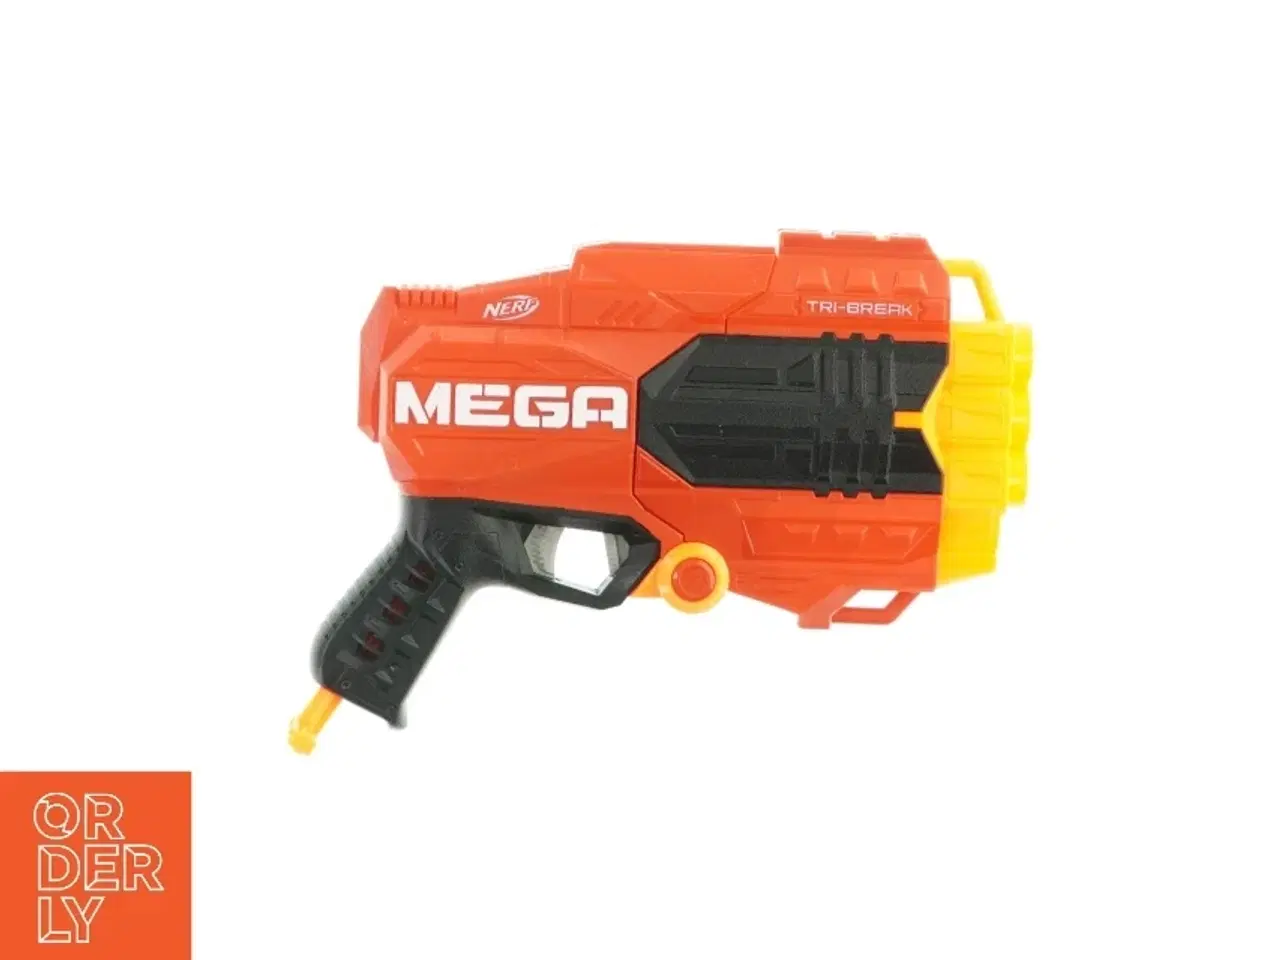 Billede 1 - Nerf pistol - Tri-break mega (str. L: 28 cm )